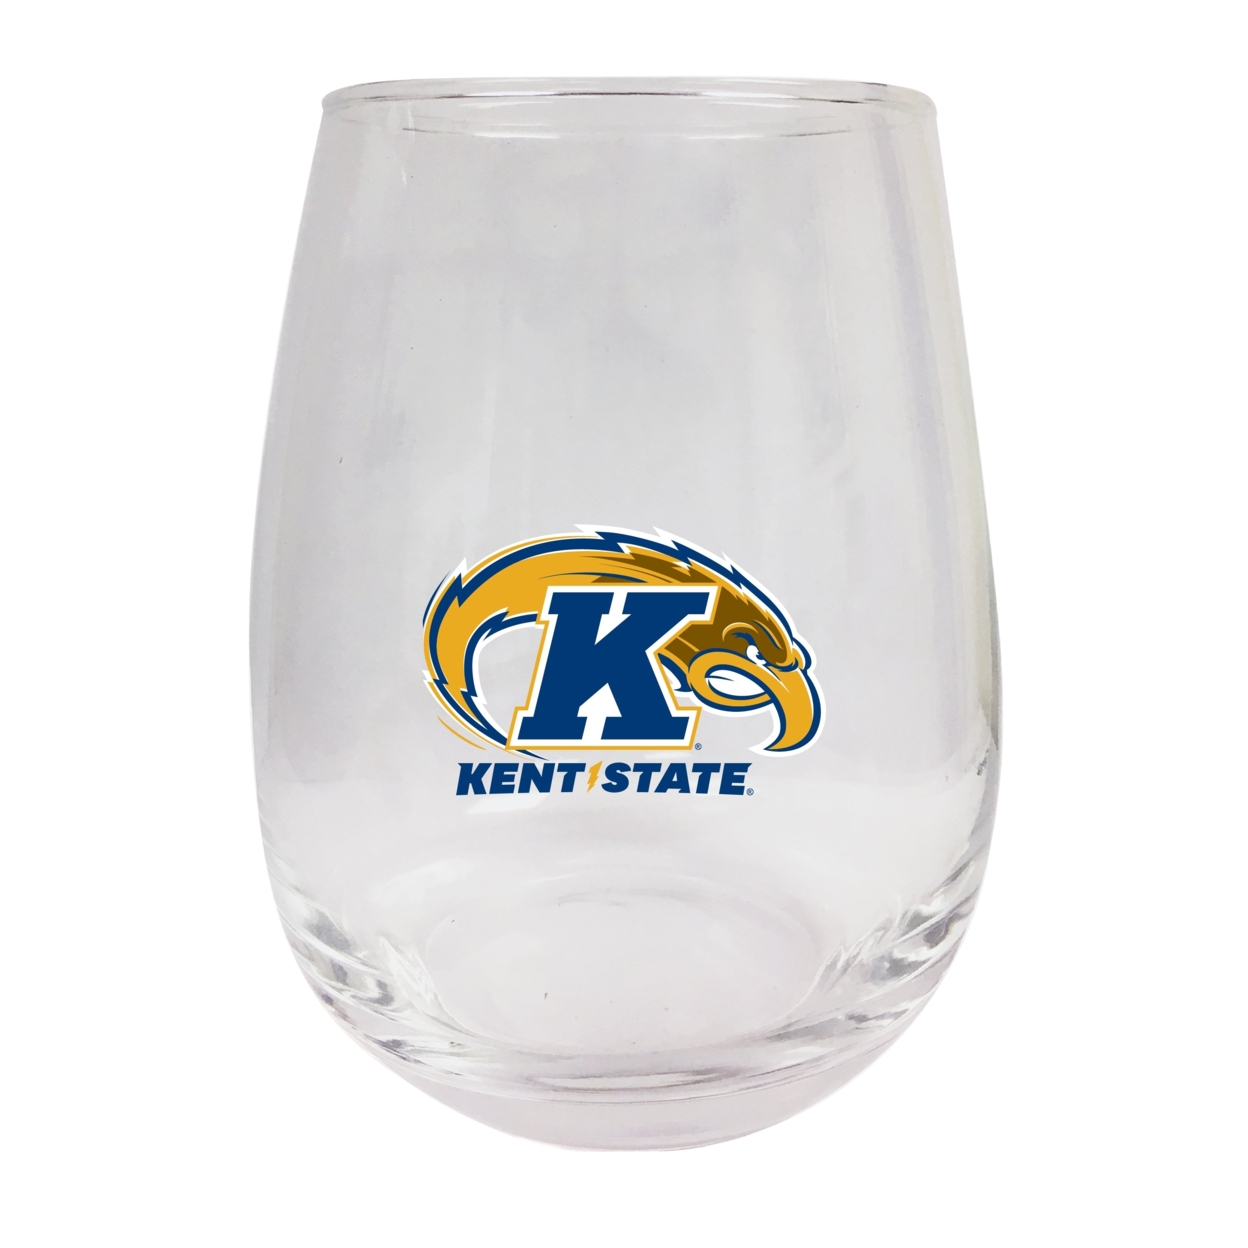 Kent State University 15oz Stemless Wine Glass - 2-Pack